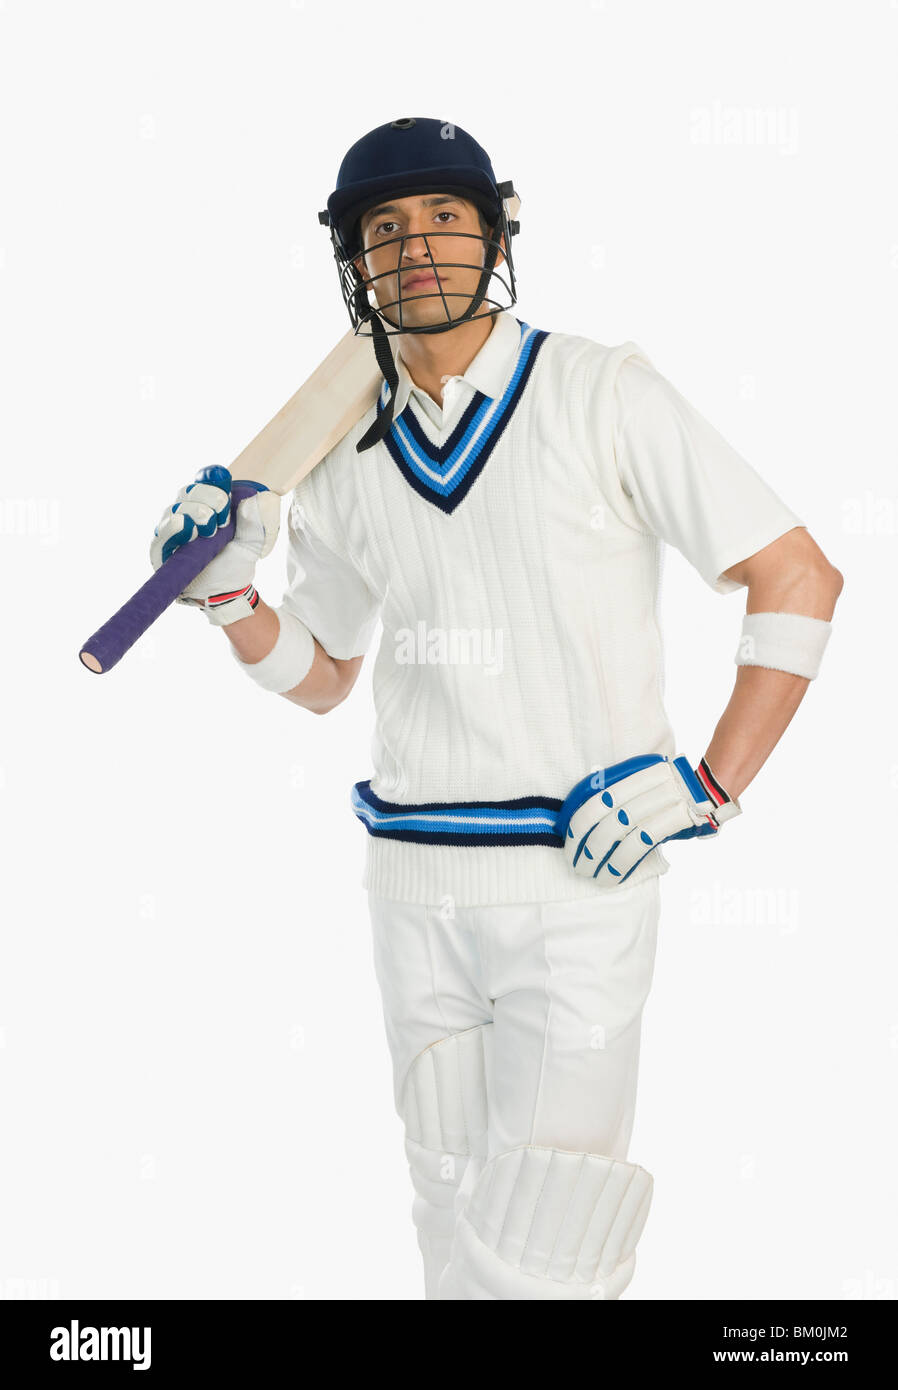 Cricket batsman Stock Photo